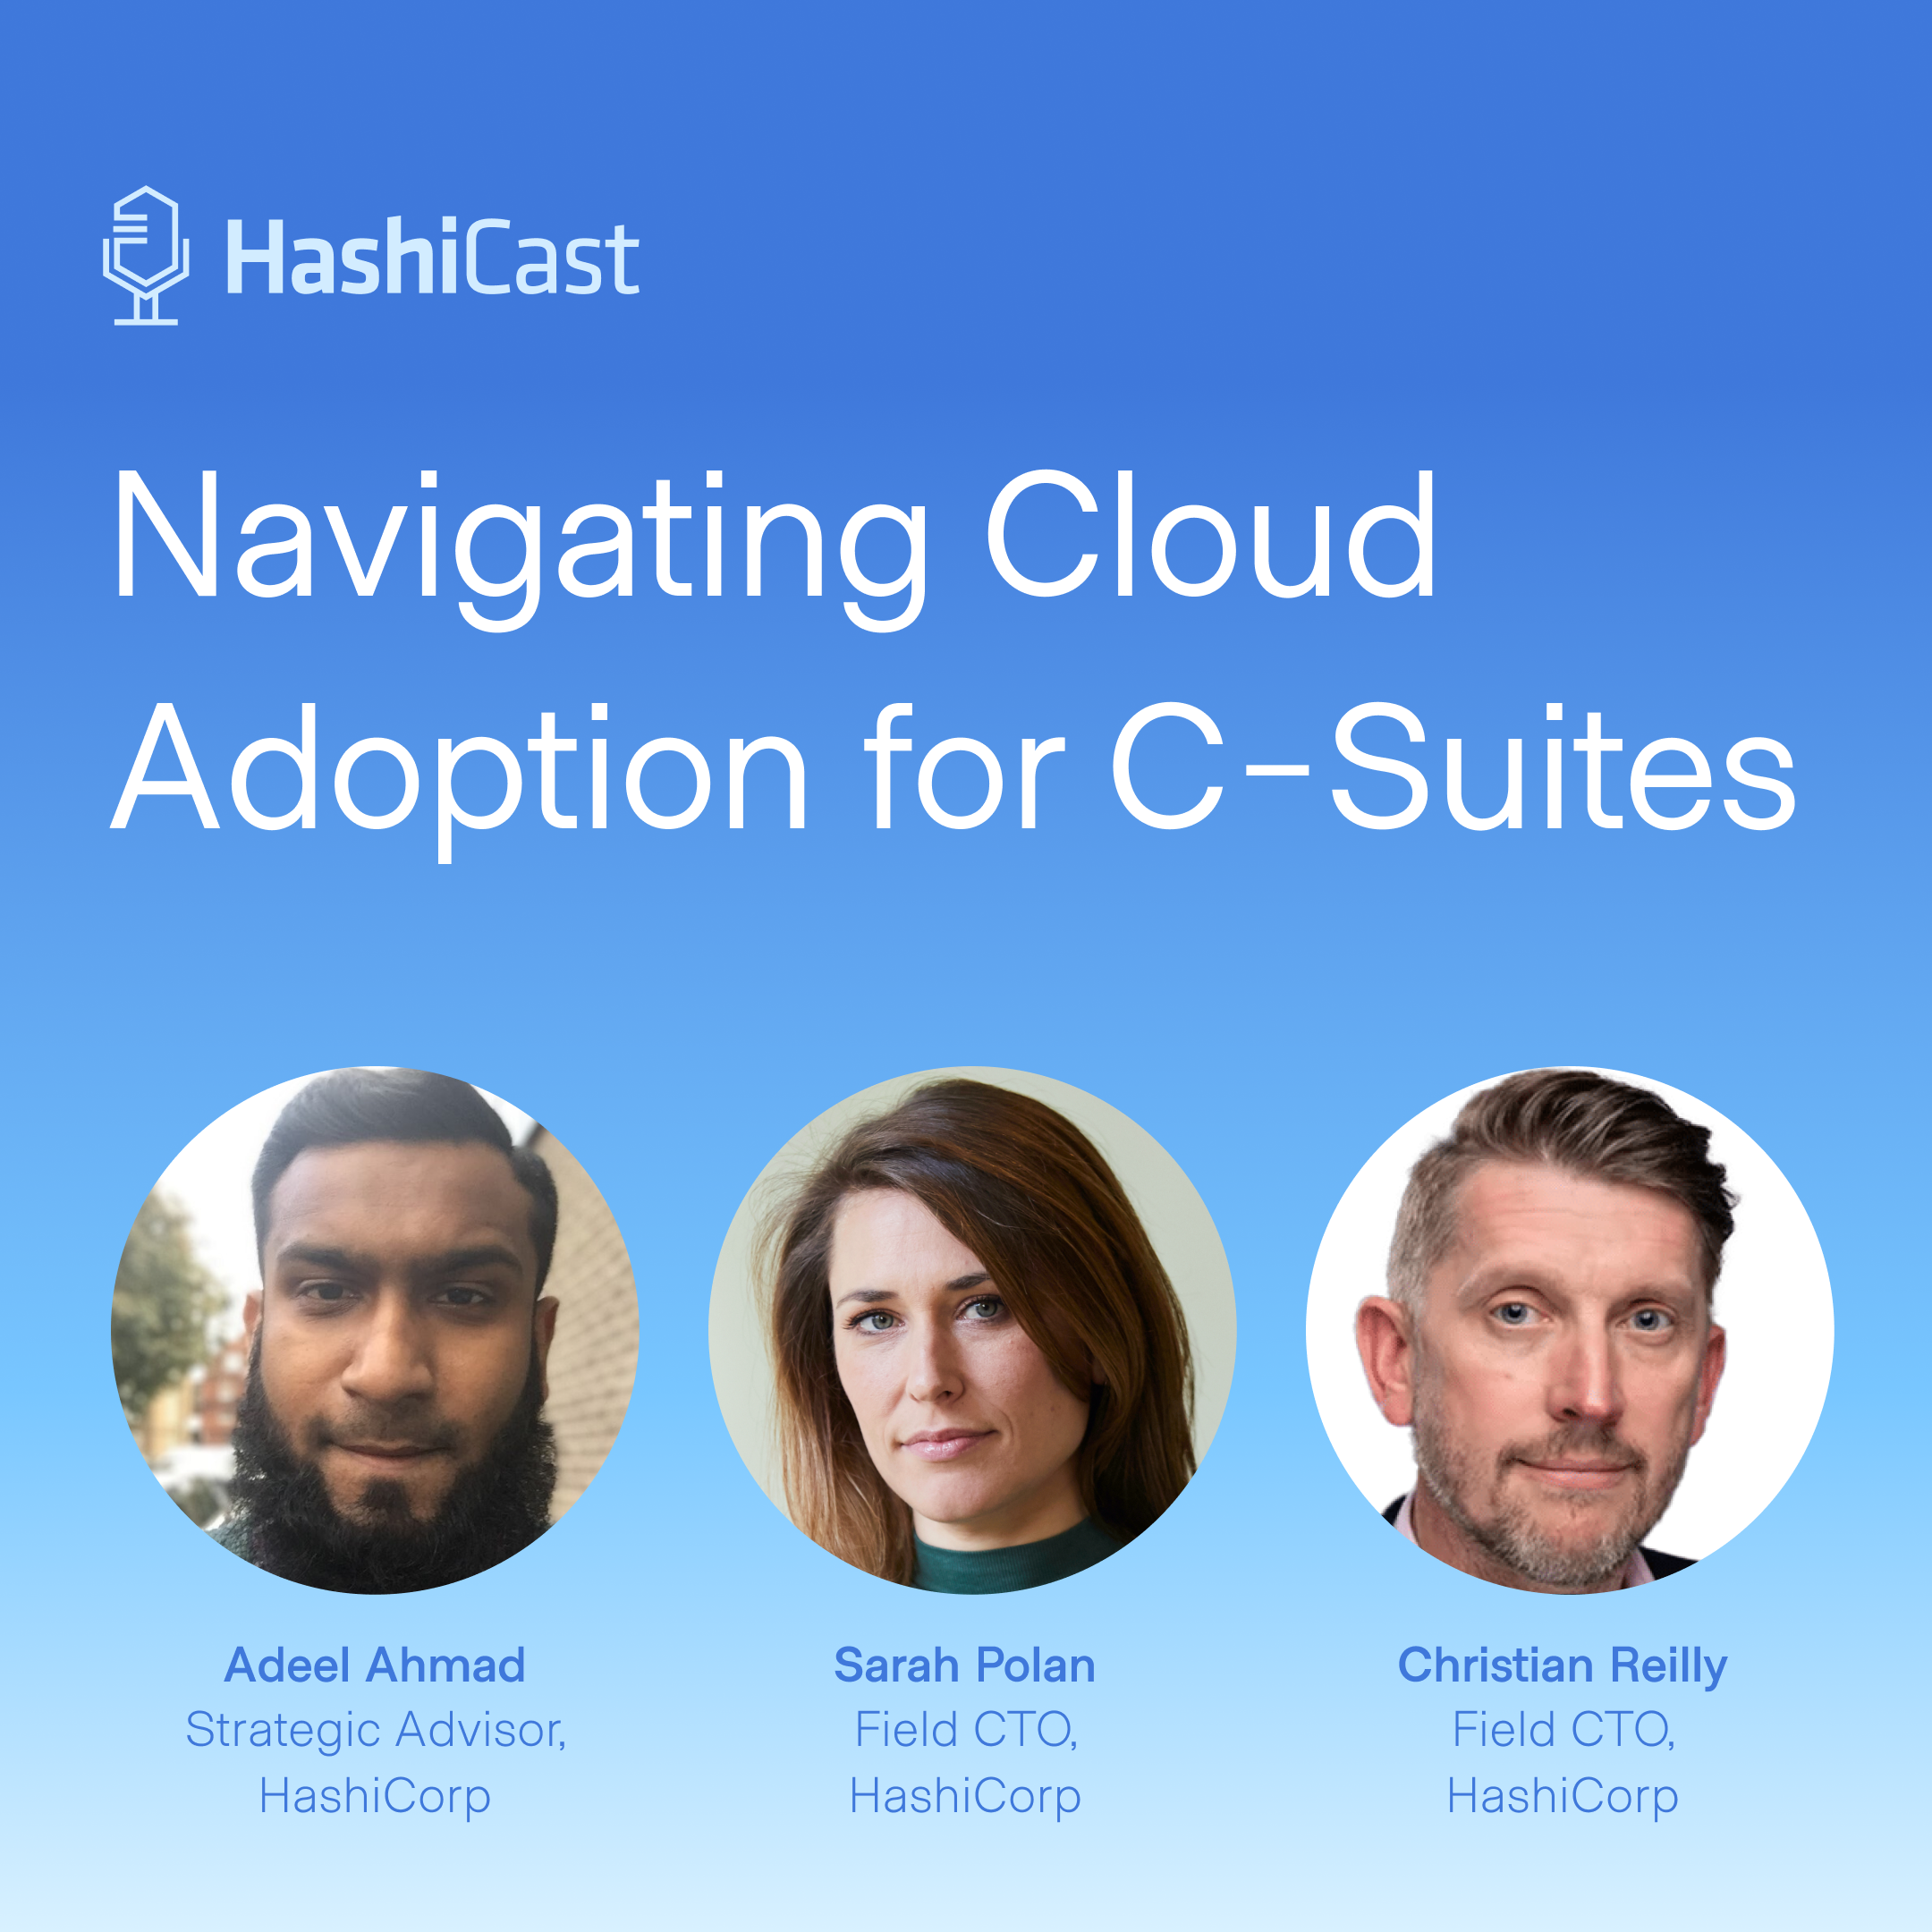 Speakers for Navigating Cloud Adoption for C-Suites